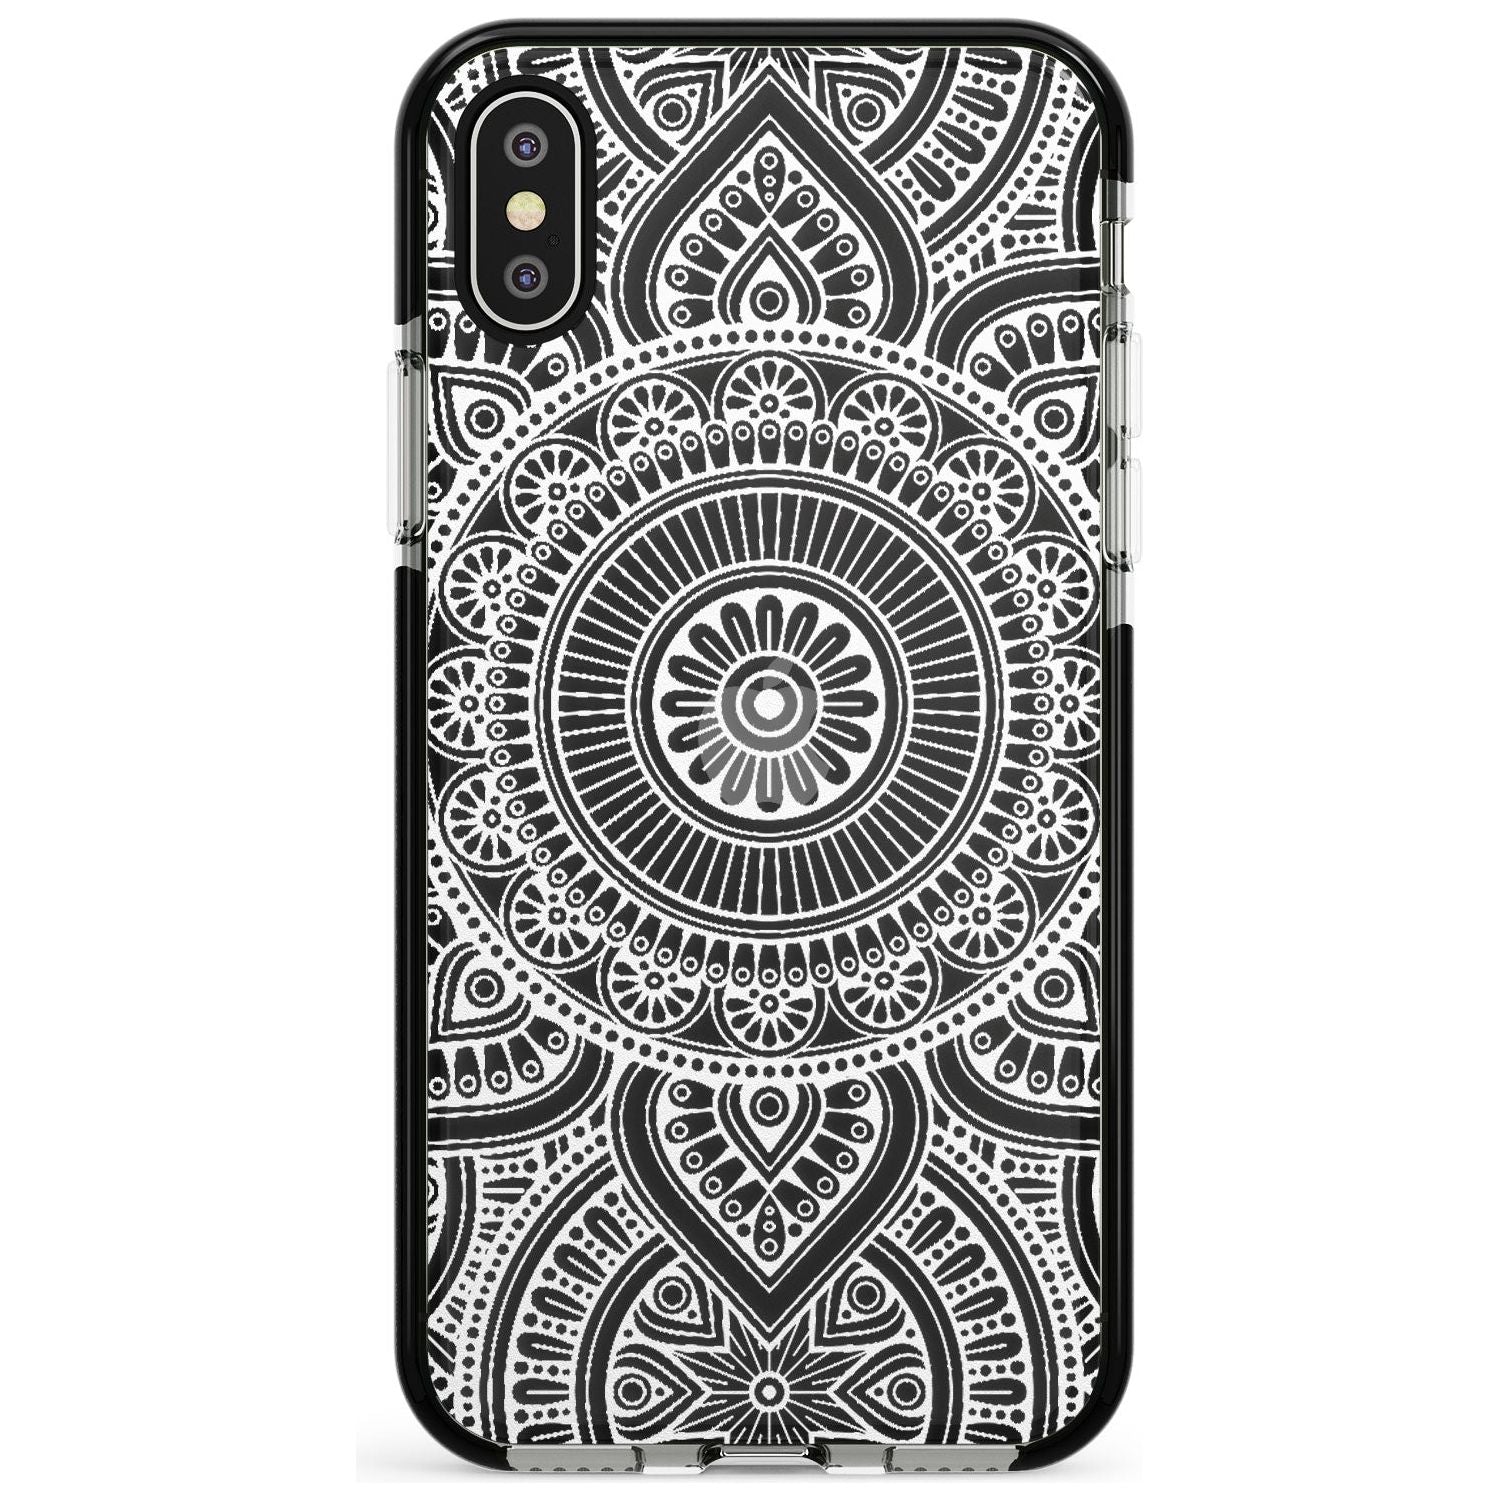 White Henna Flower Wheel Black Impact Phone Case for iPhone X XS Max XR